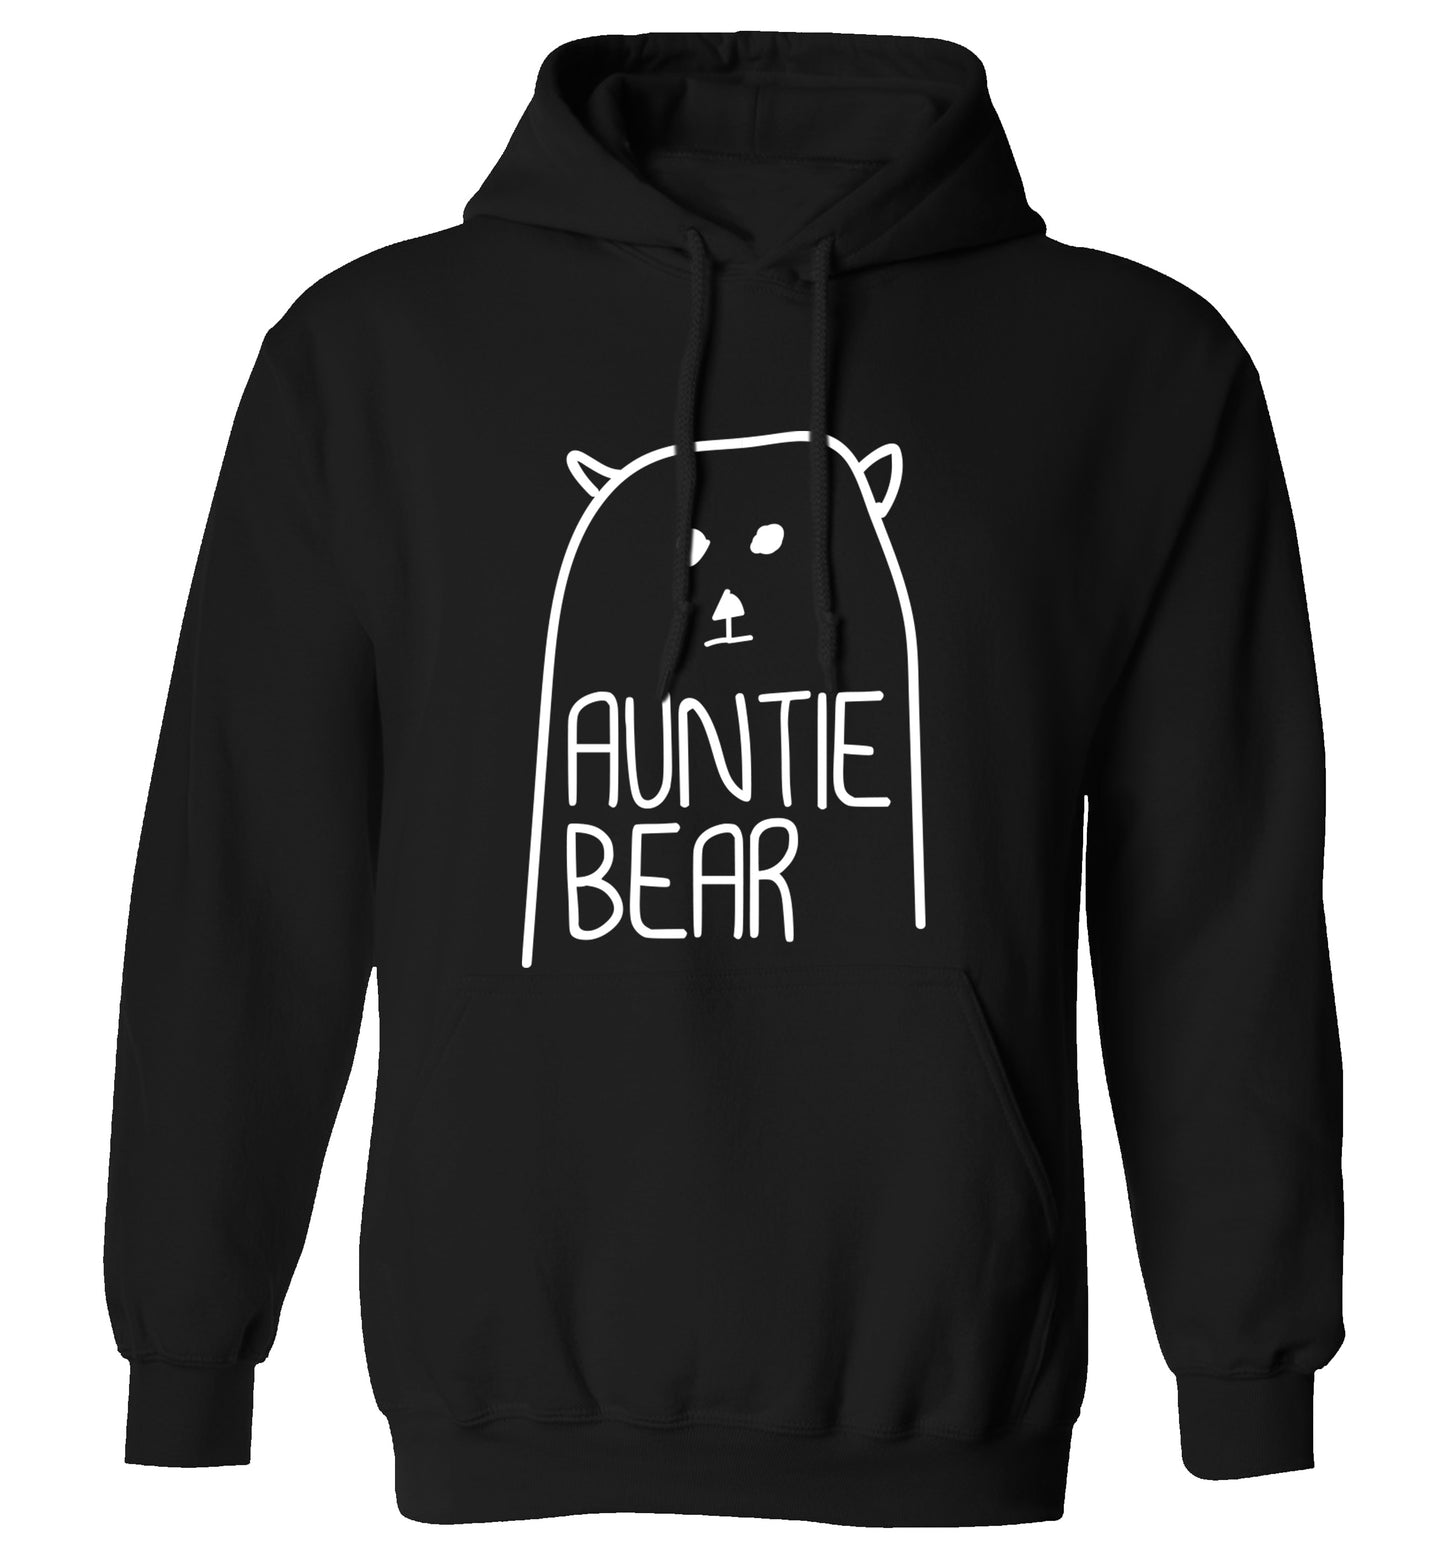 Auntie bear adults unisex black hoodie 2XL